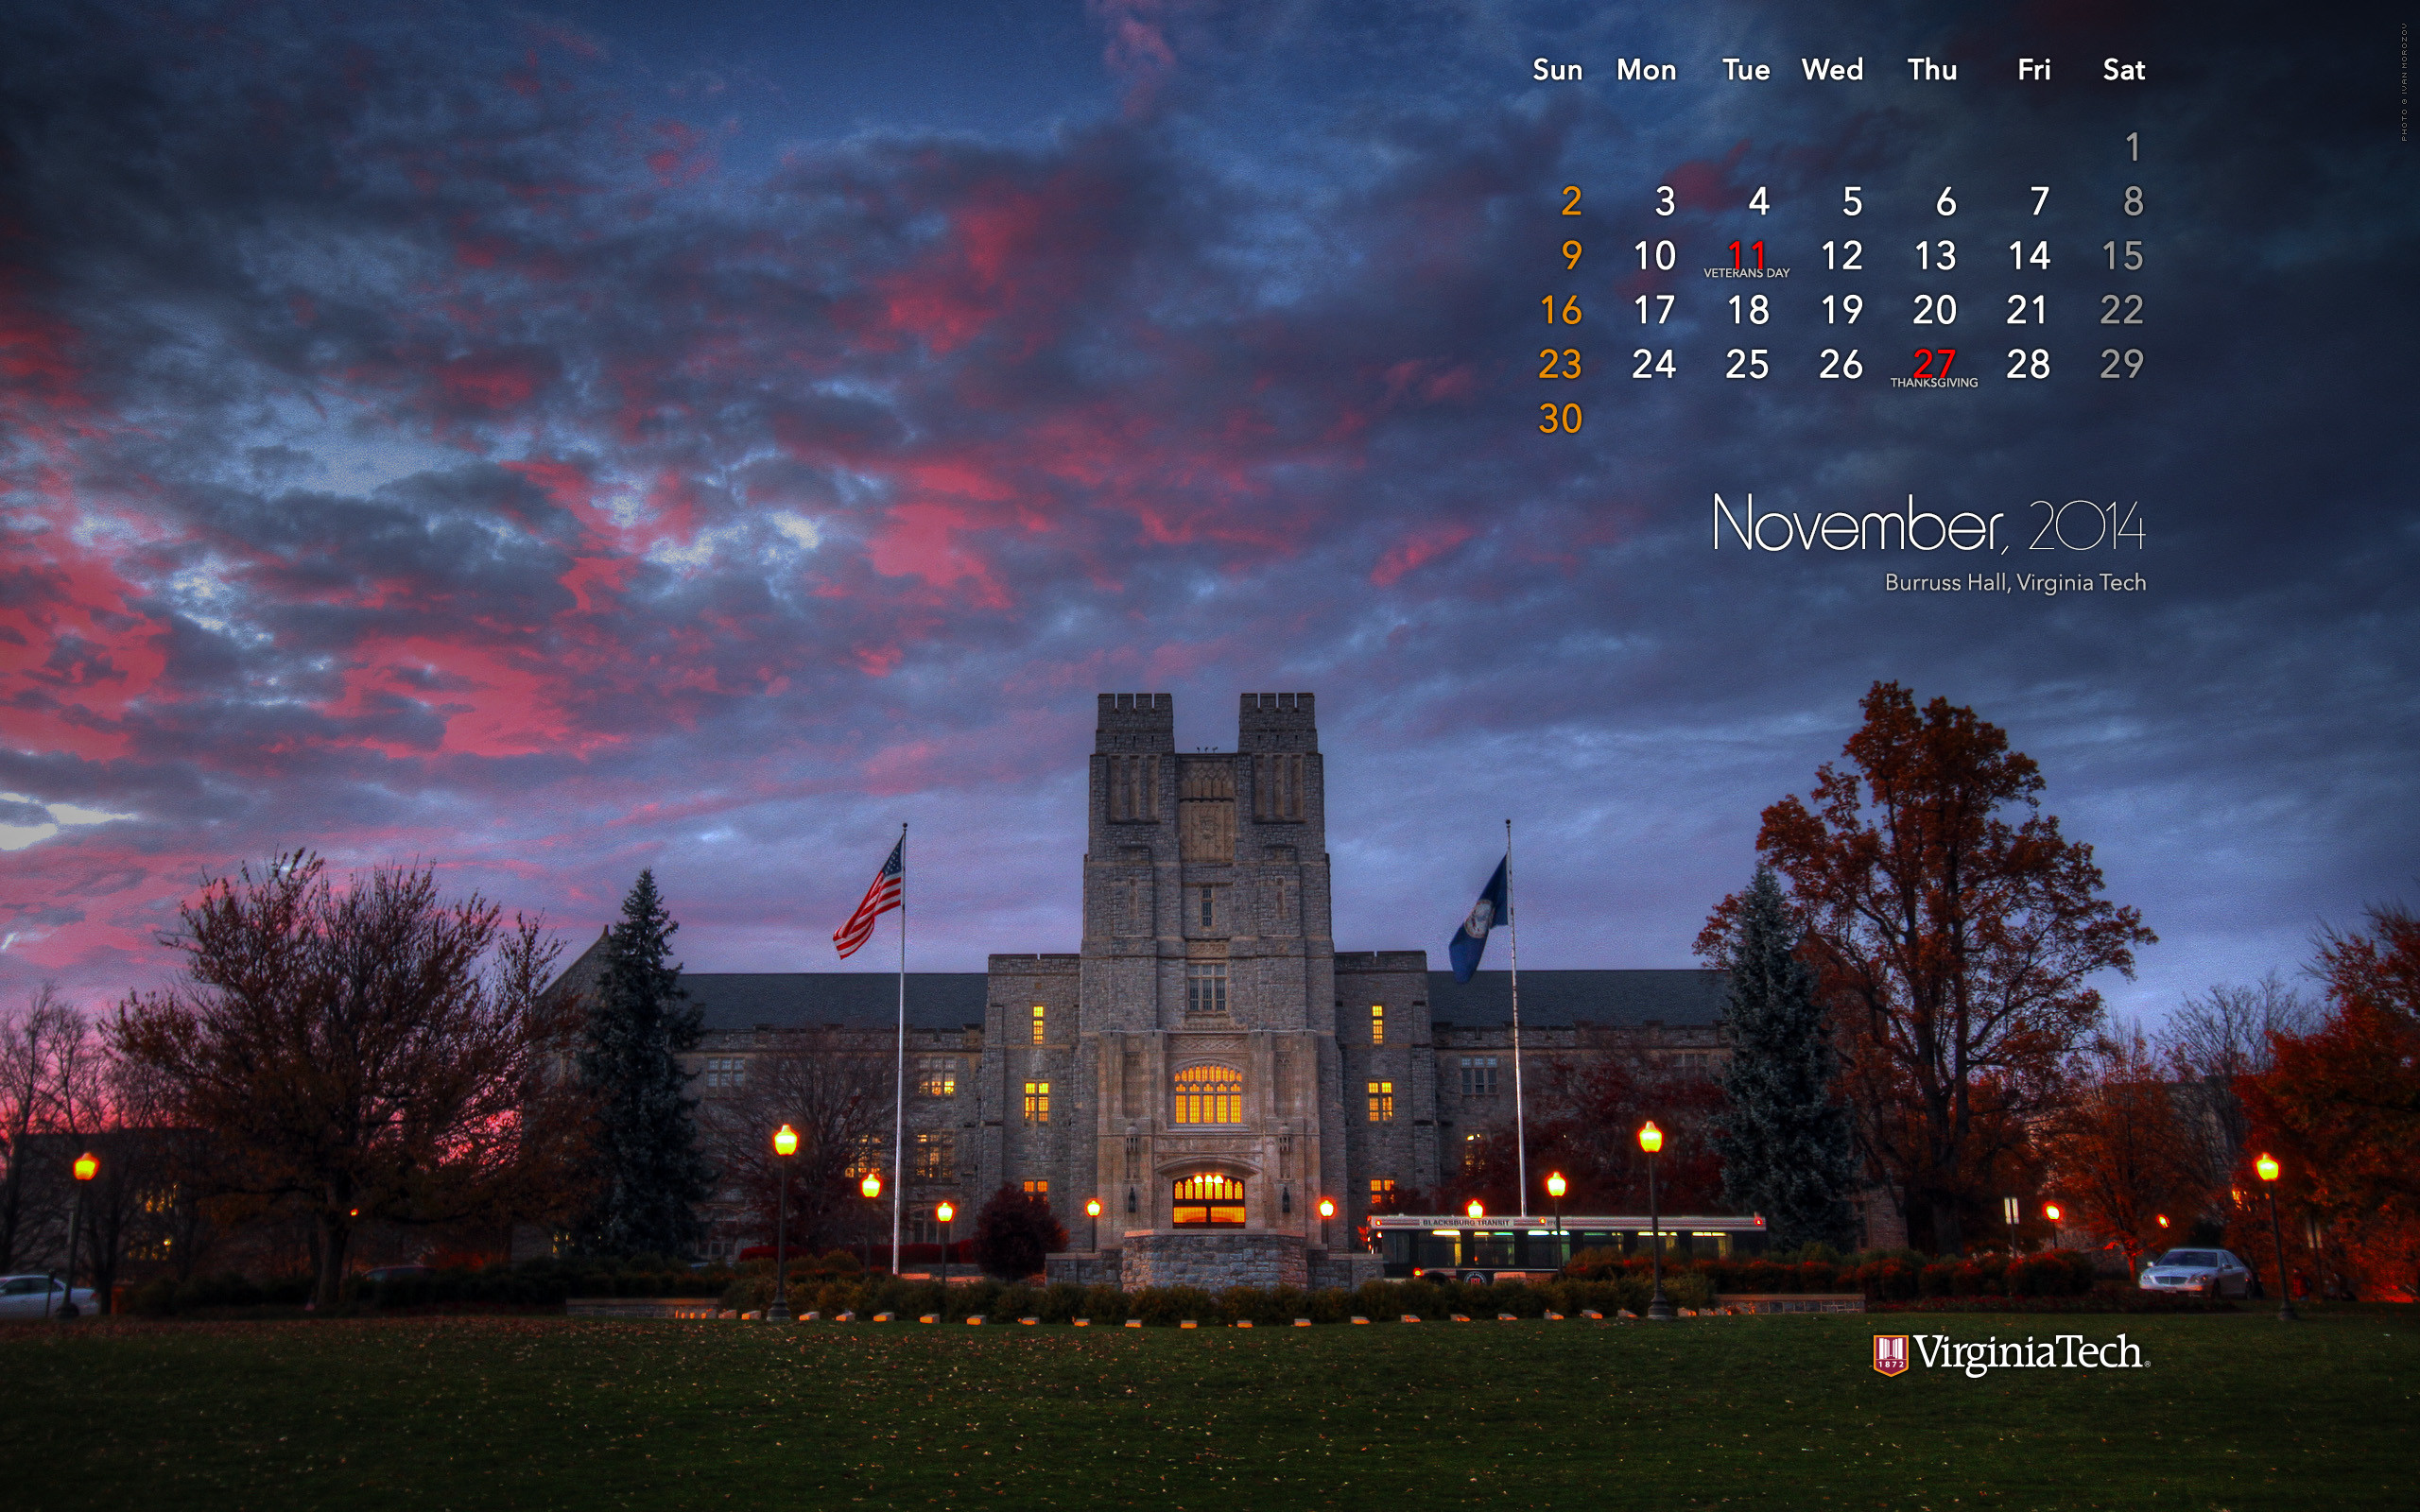 2560x1600 Desktop Wallpaper November 2014 Virginia Tech Download 2560 x 1600 